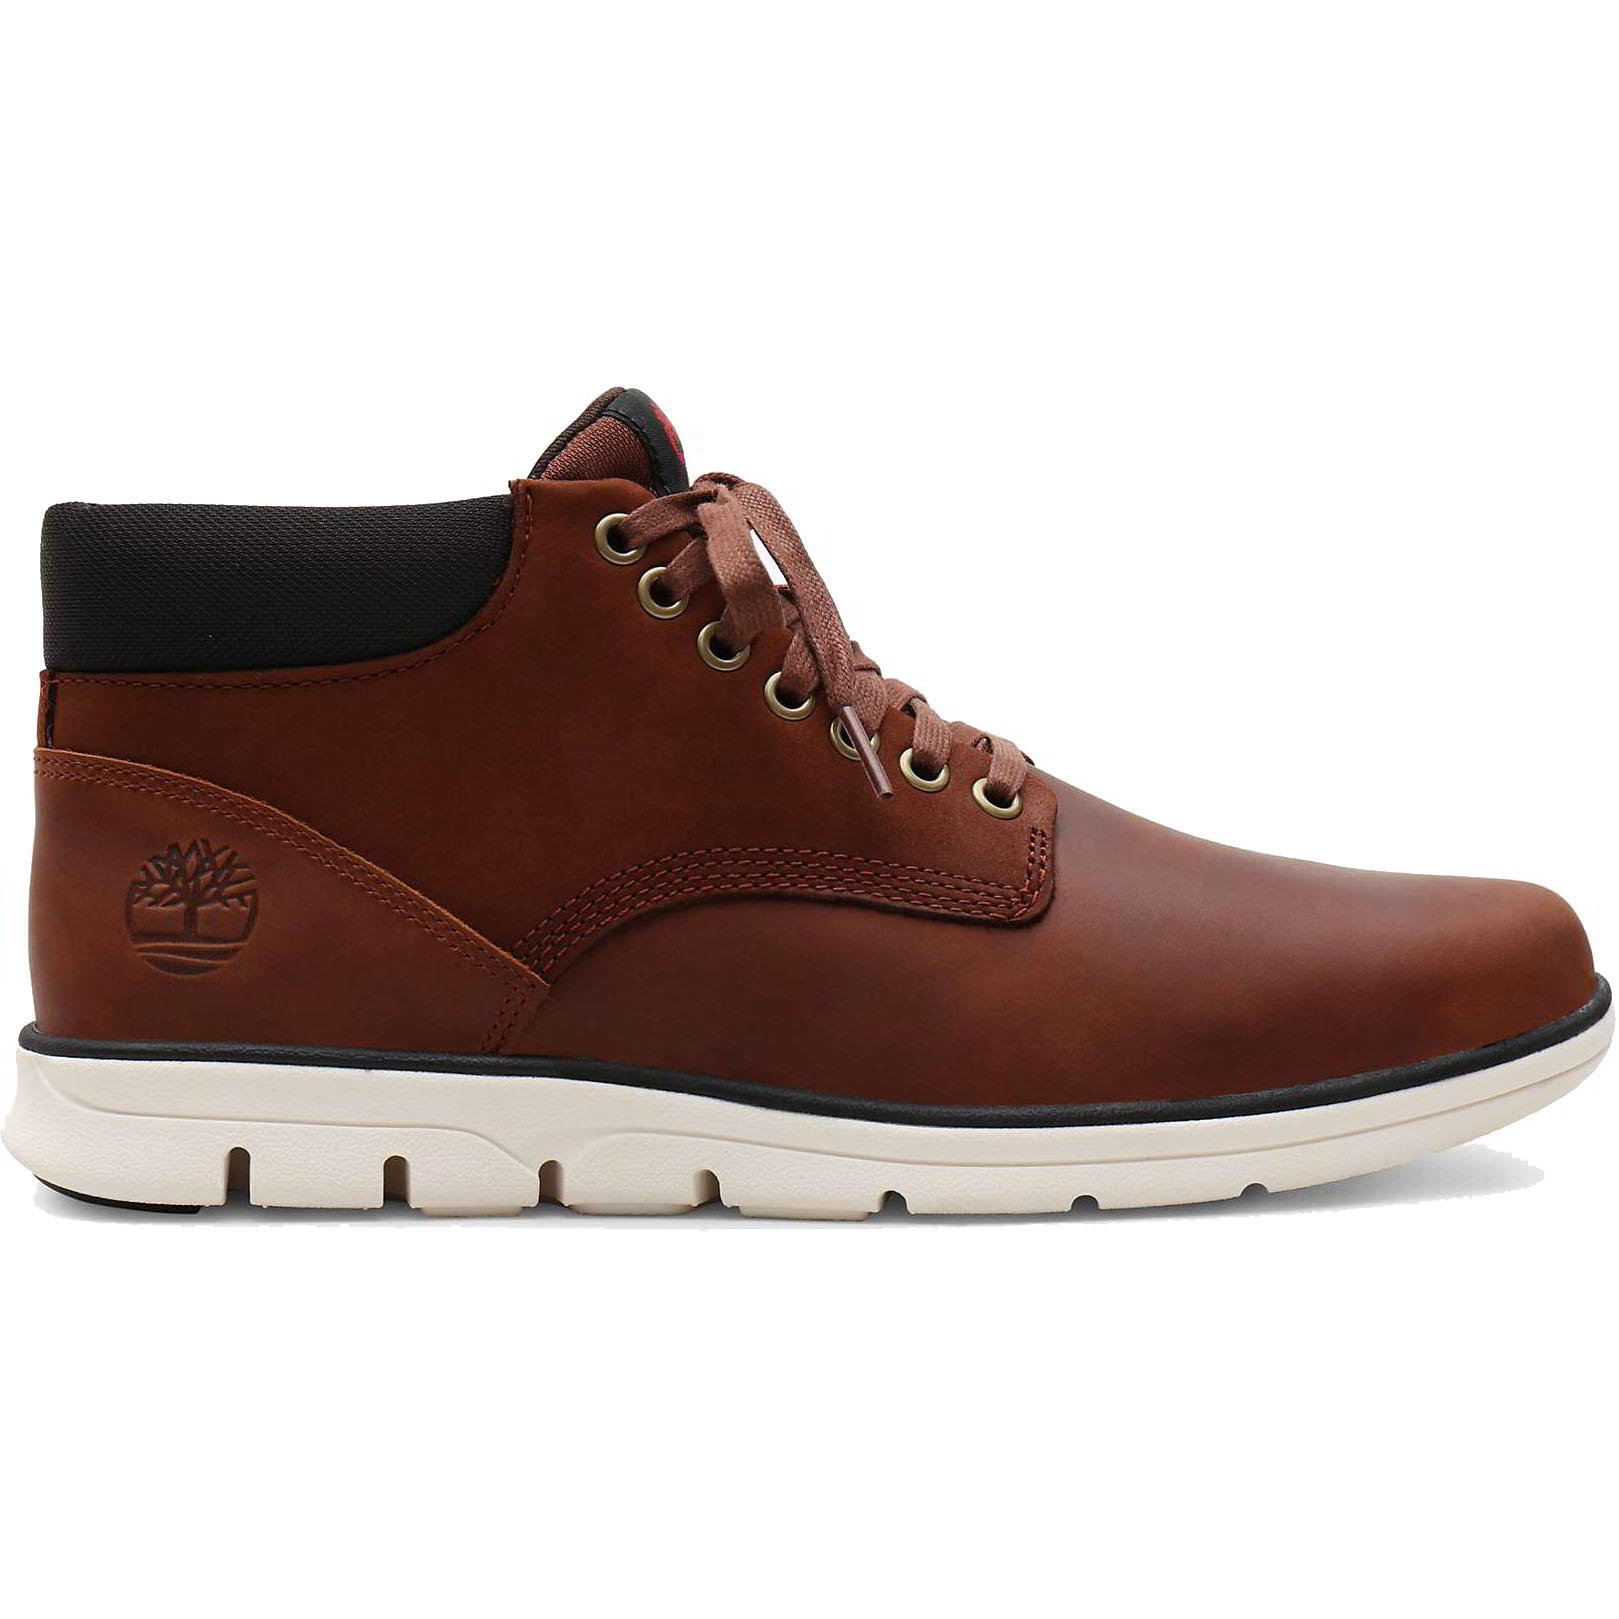 Timberland Men's Bradstreet Chukka Leather Ankle Boots - UK 10